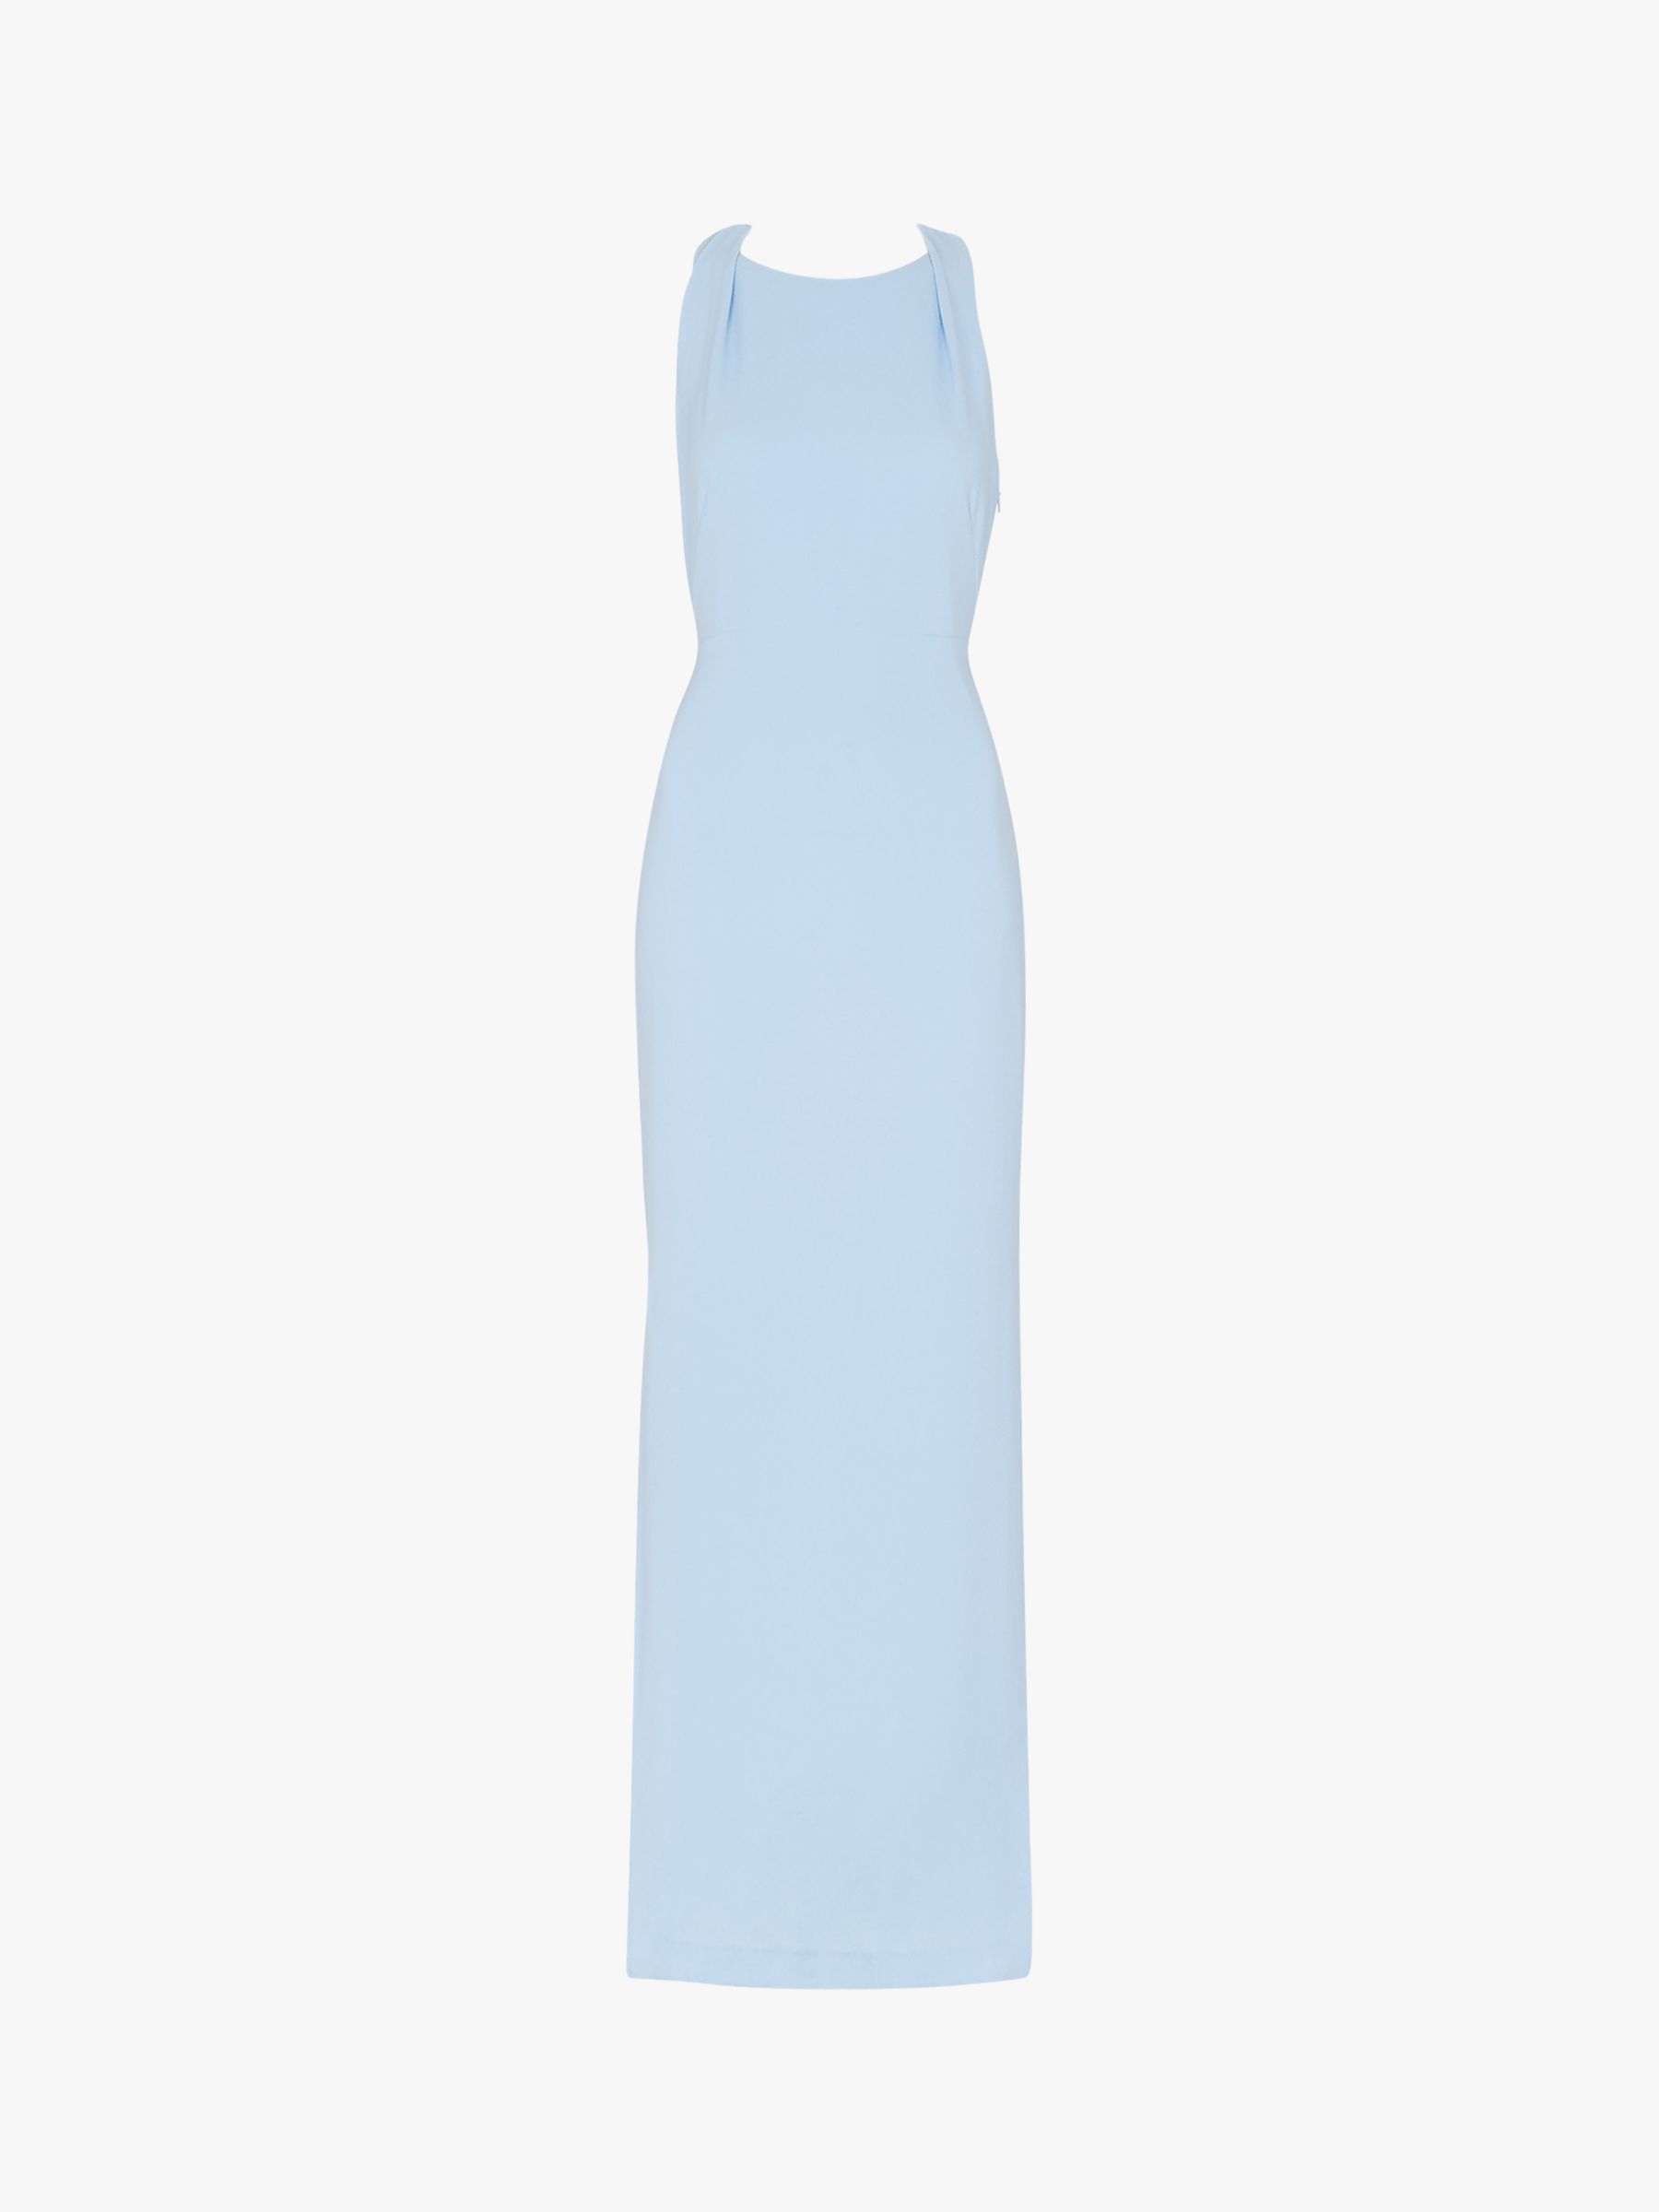 Whistles Tie Back Maxi Dress, Light Blue at John Lewis & Partners